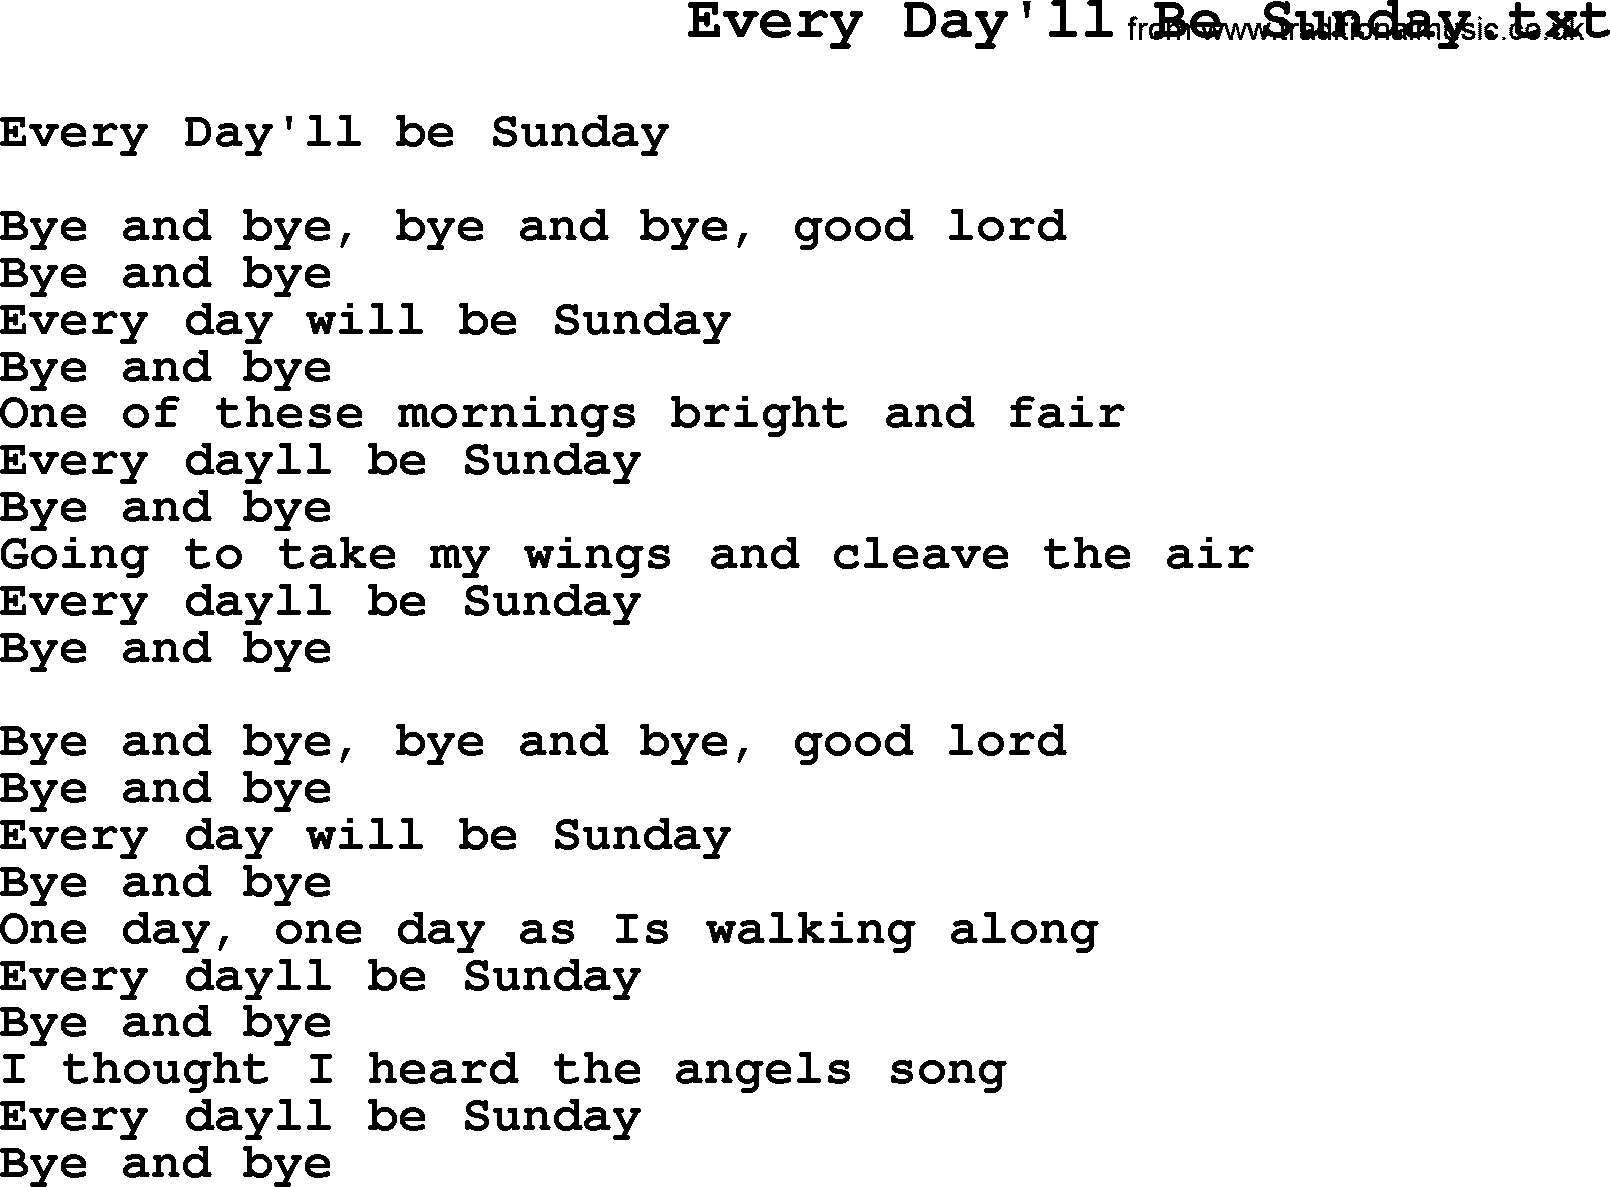 Negro Spiritual Song Lyrics for Every Day'll Be Sunday